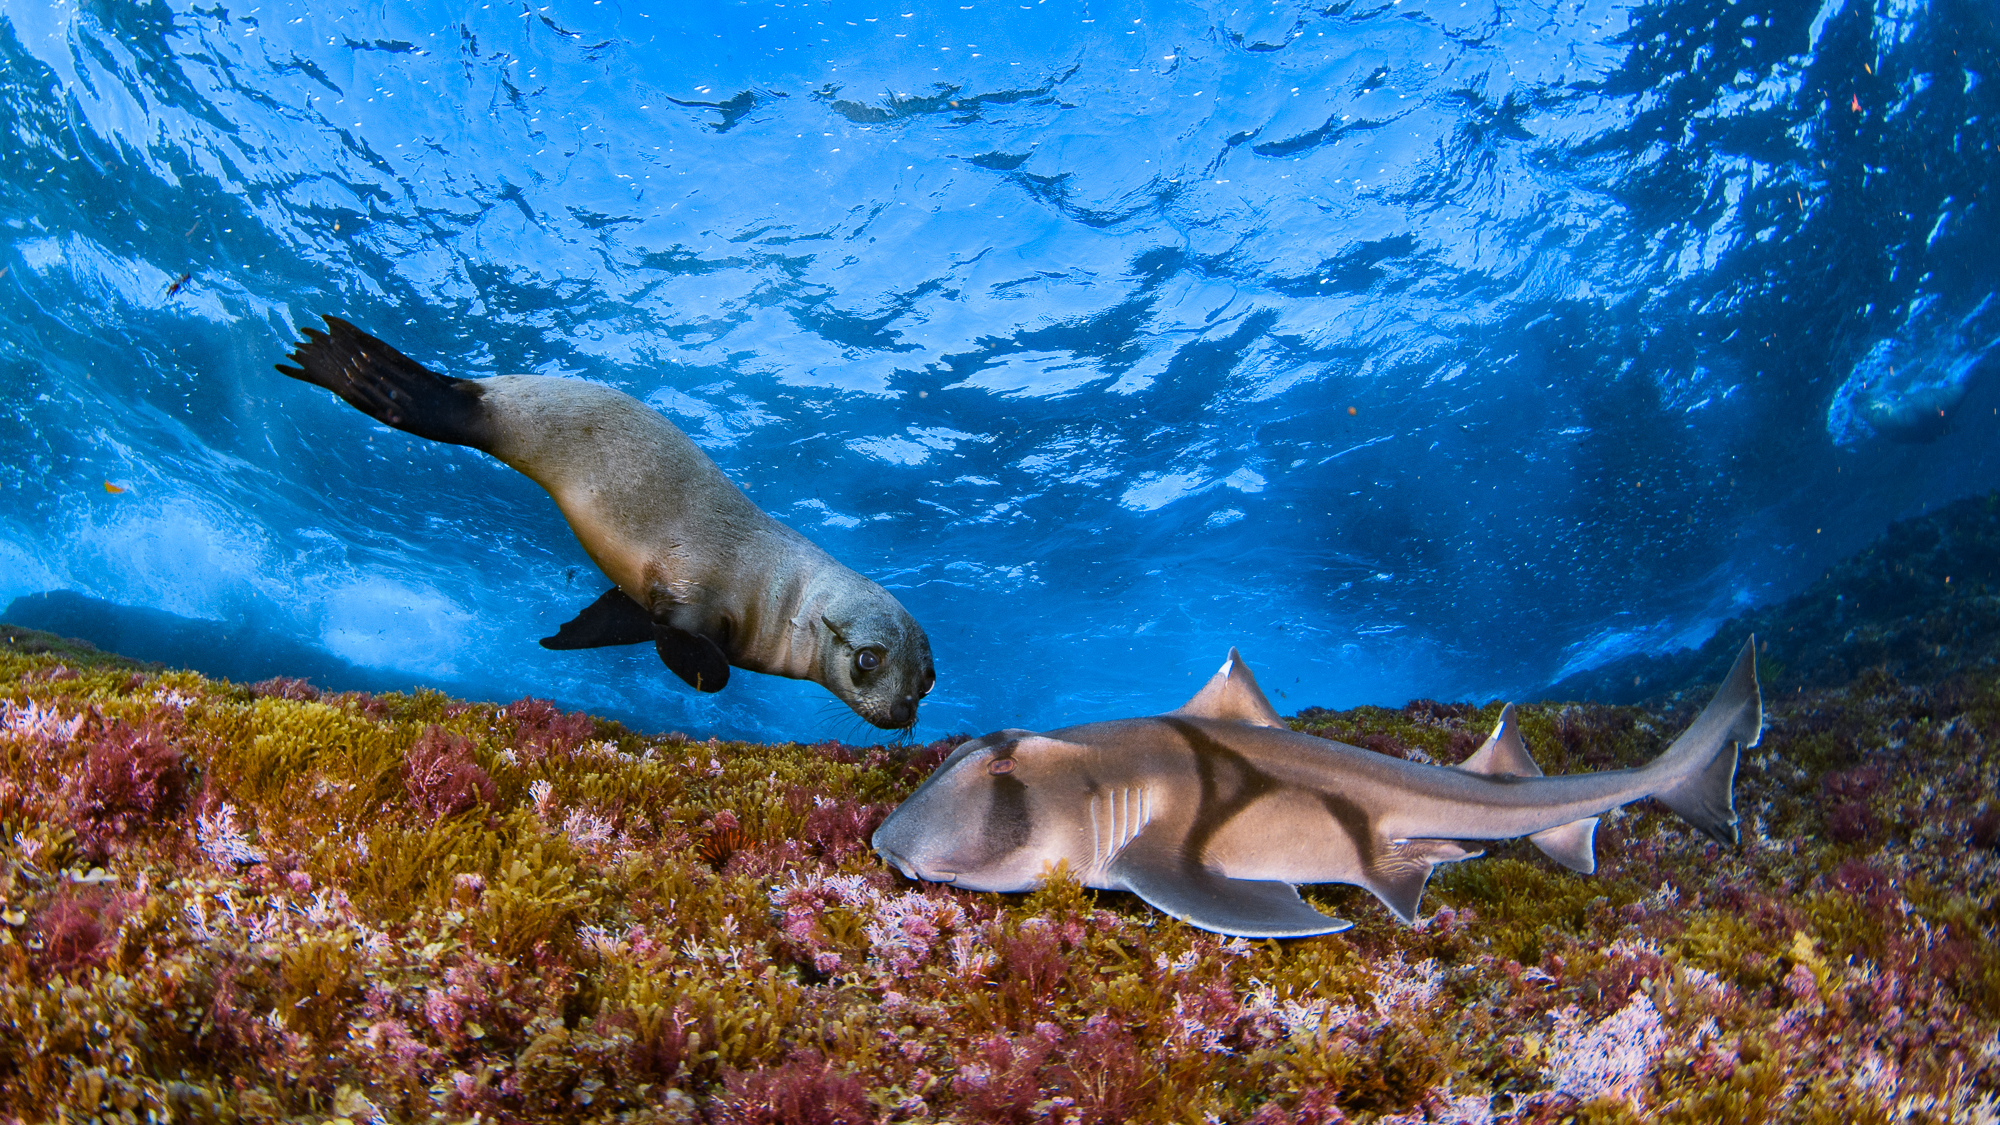 Seal-Shark encounter